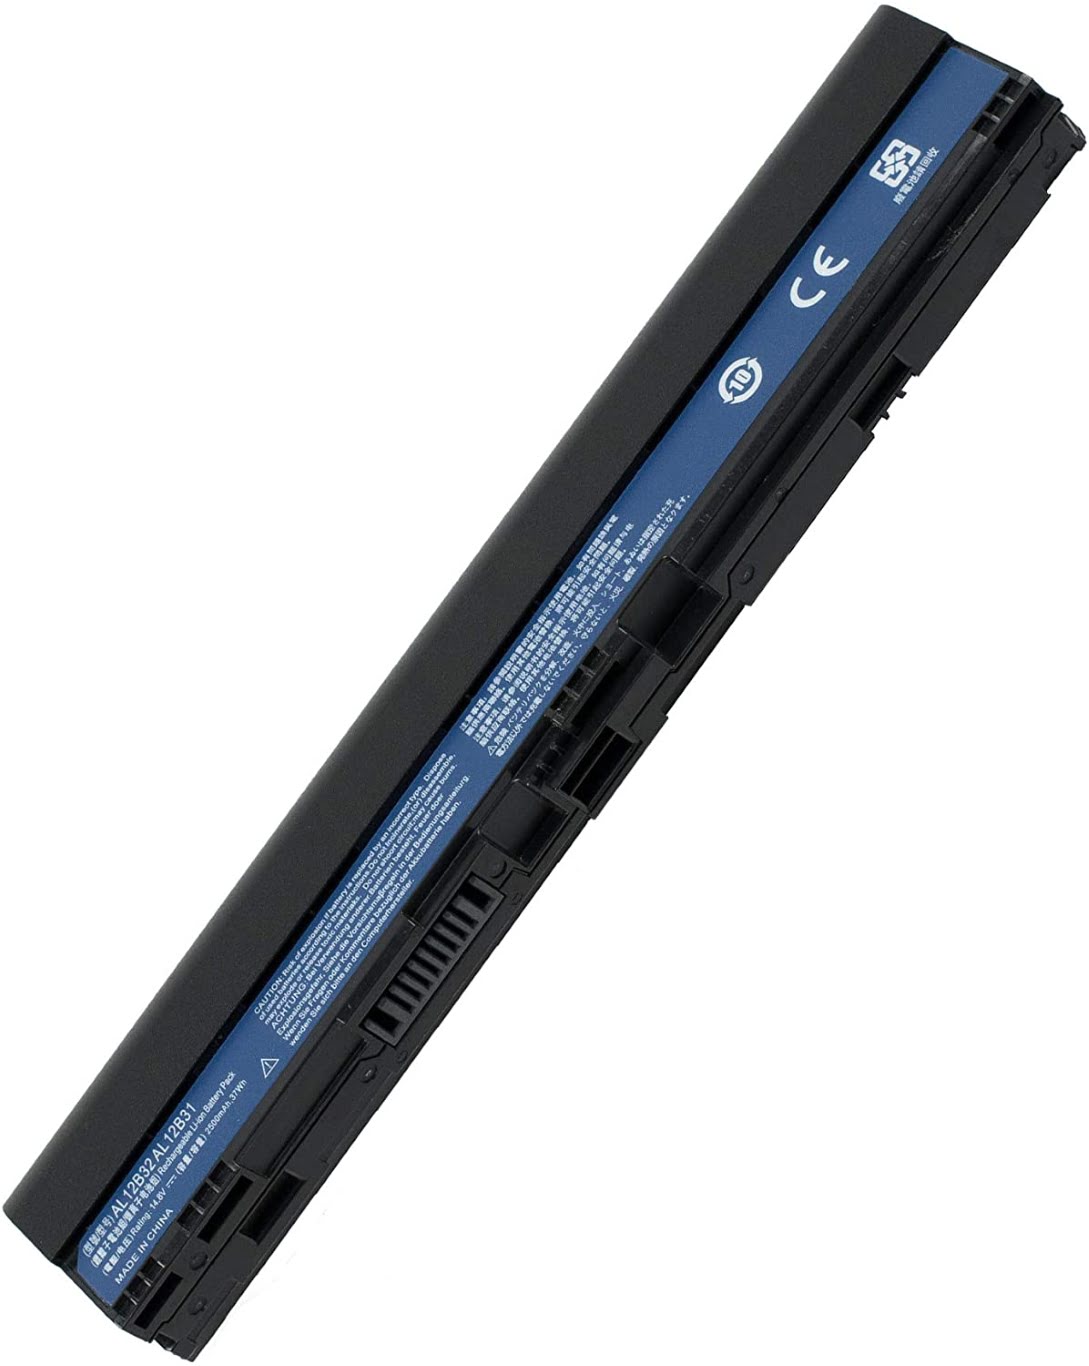 AK.004BT.098, AL12A31 replacement Laptop Battery for Acer Aspire C7 Chromebook Series, Aspire C710 Chromebook Series, 4 cells, 14.8V, 2500mah / 37wh